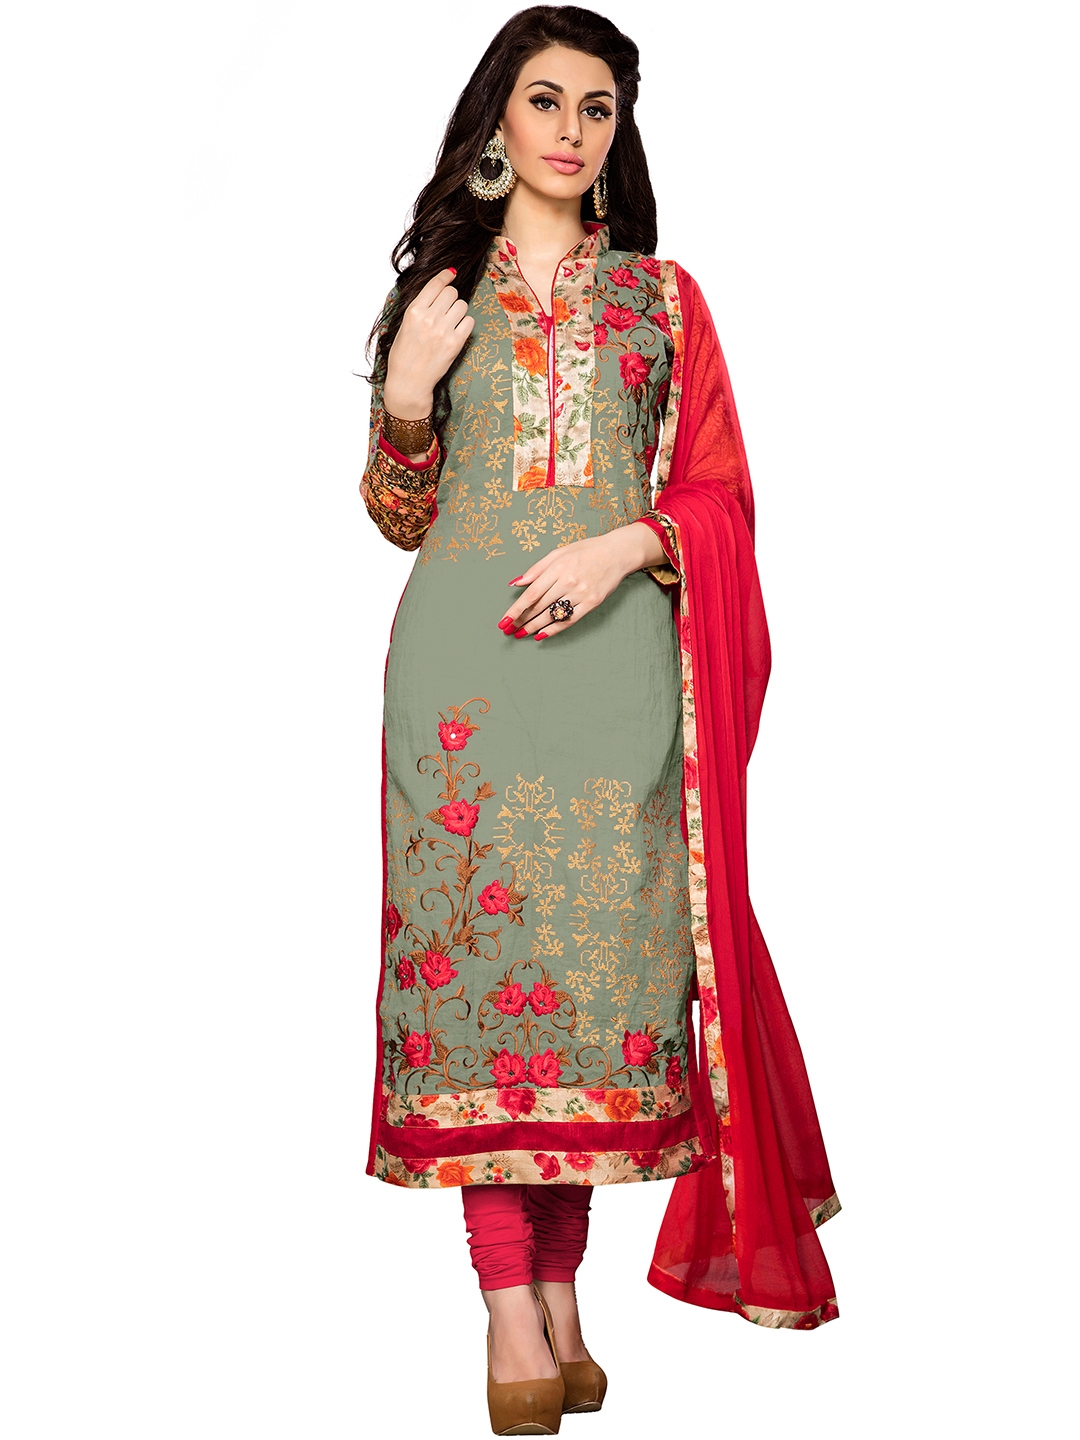 dress materials buy ladies dress materials online in india